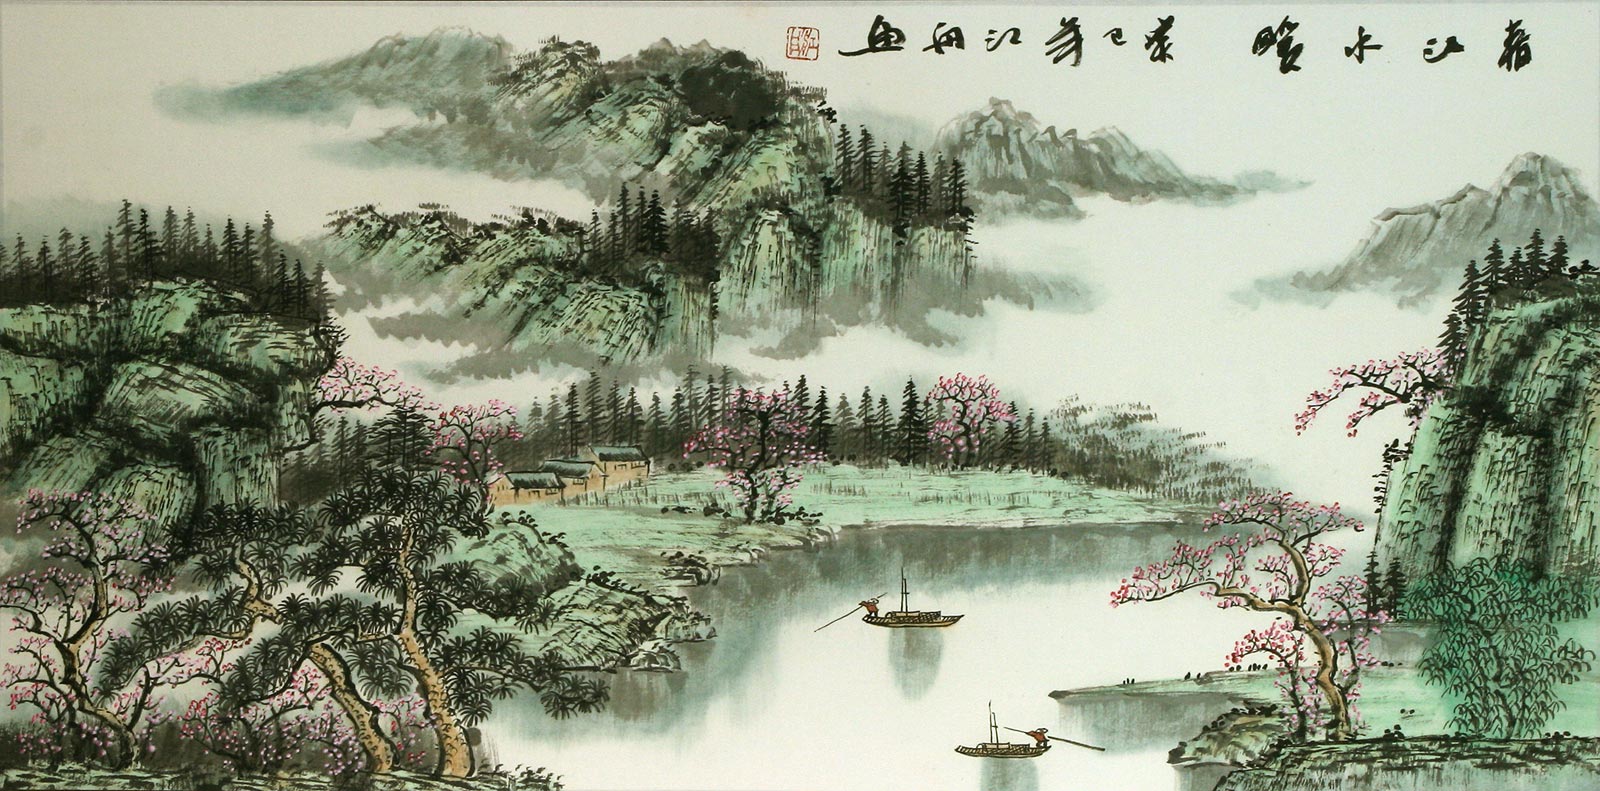 Huge Chinese Boat River Village Landscape Painting